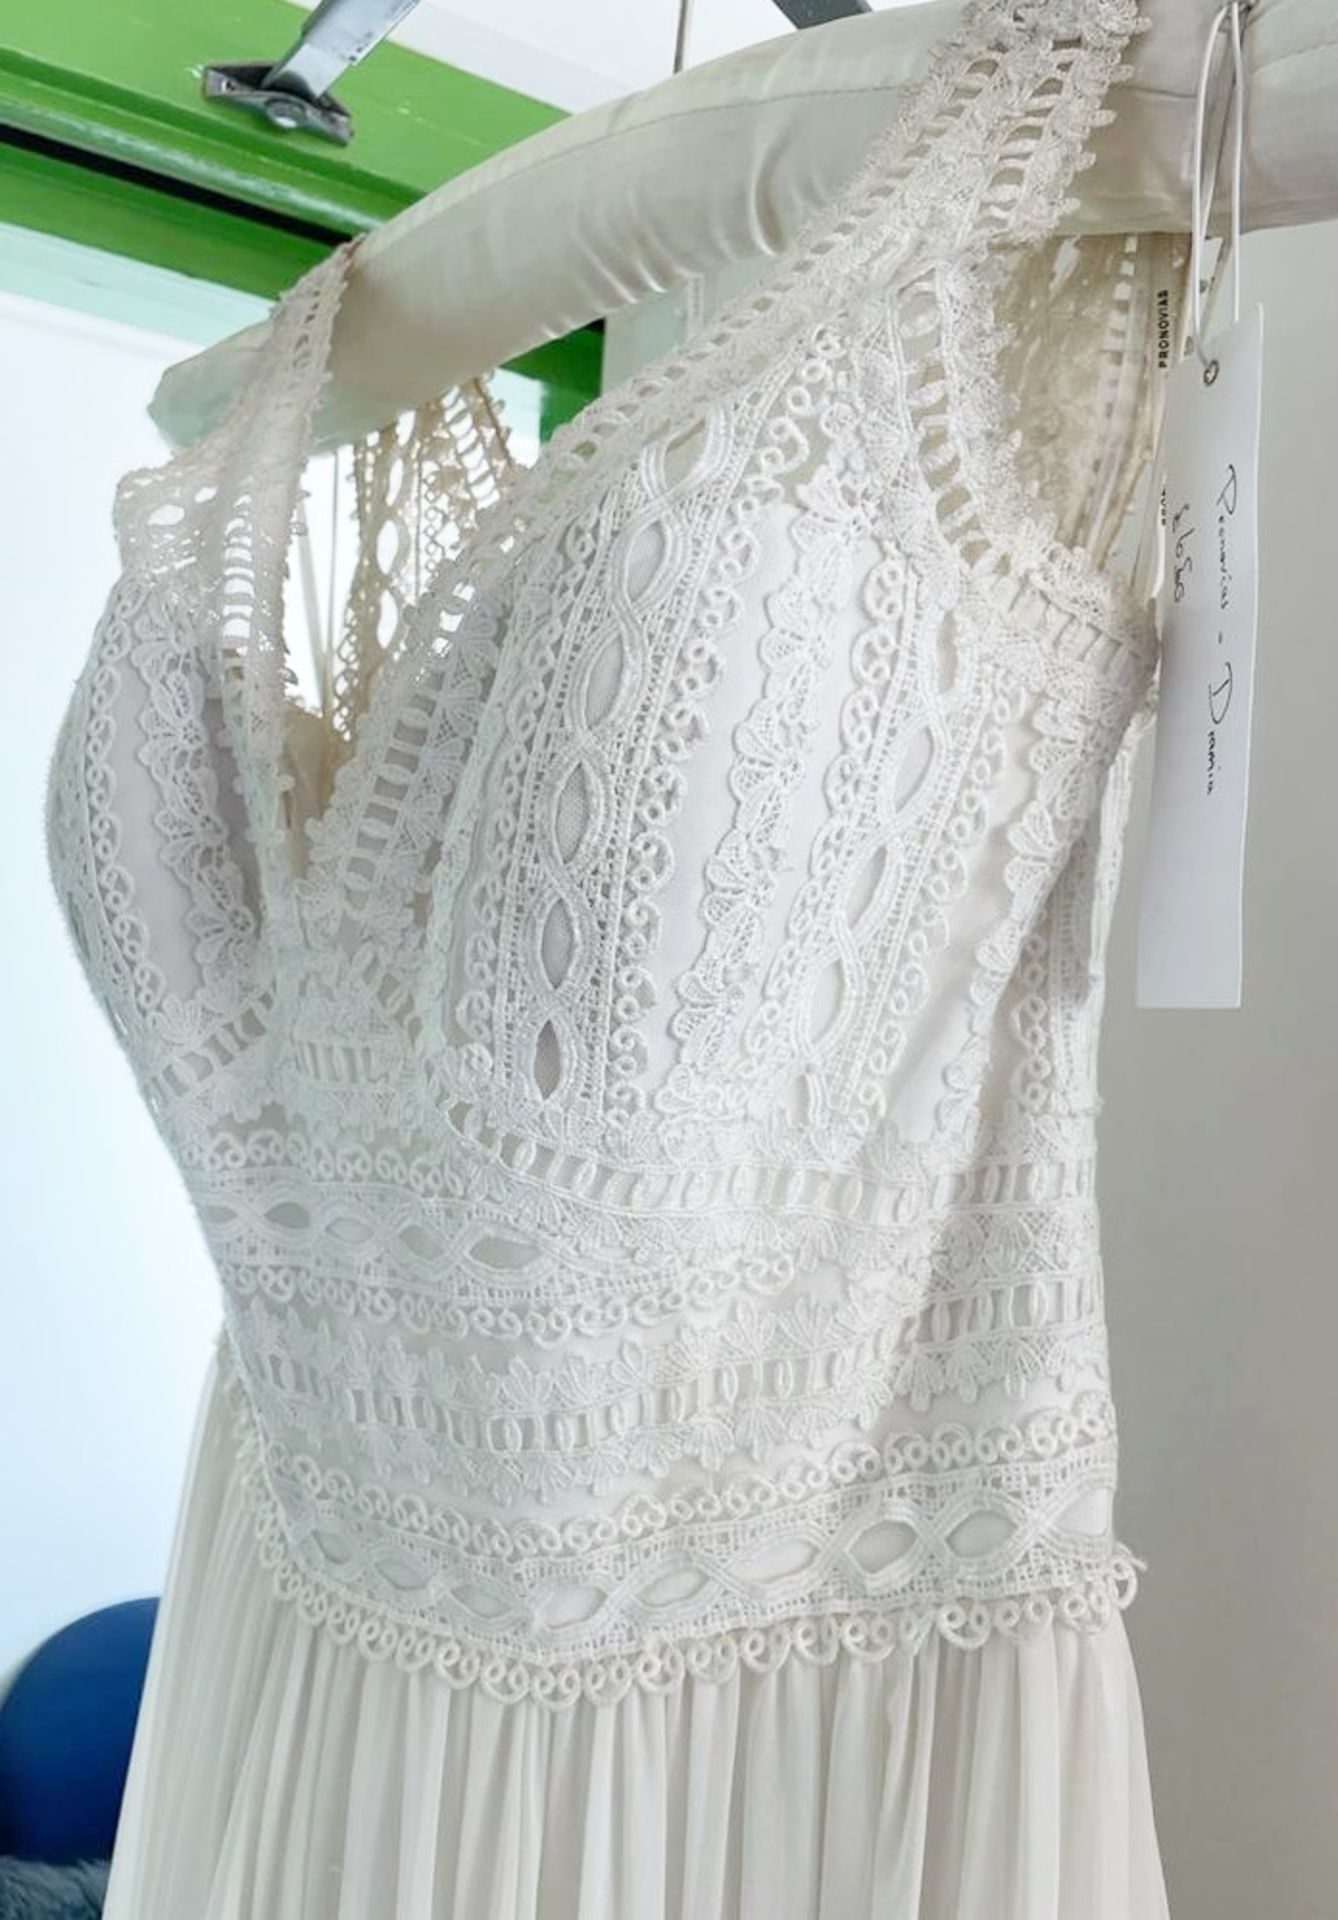 1 x PRONOVIAS 'Dramia' Designer Crocheted Lace Wedding Dress Bridal Gown, With Chiffon Gathered - Image 7 of 20